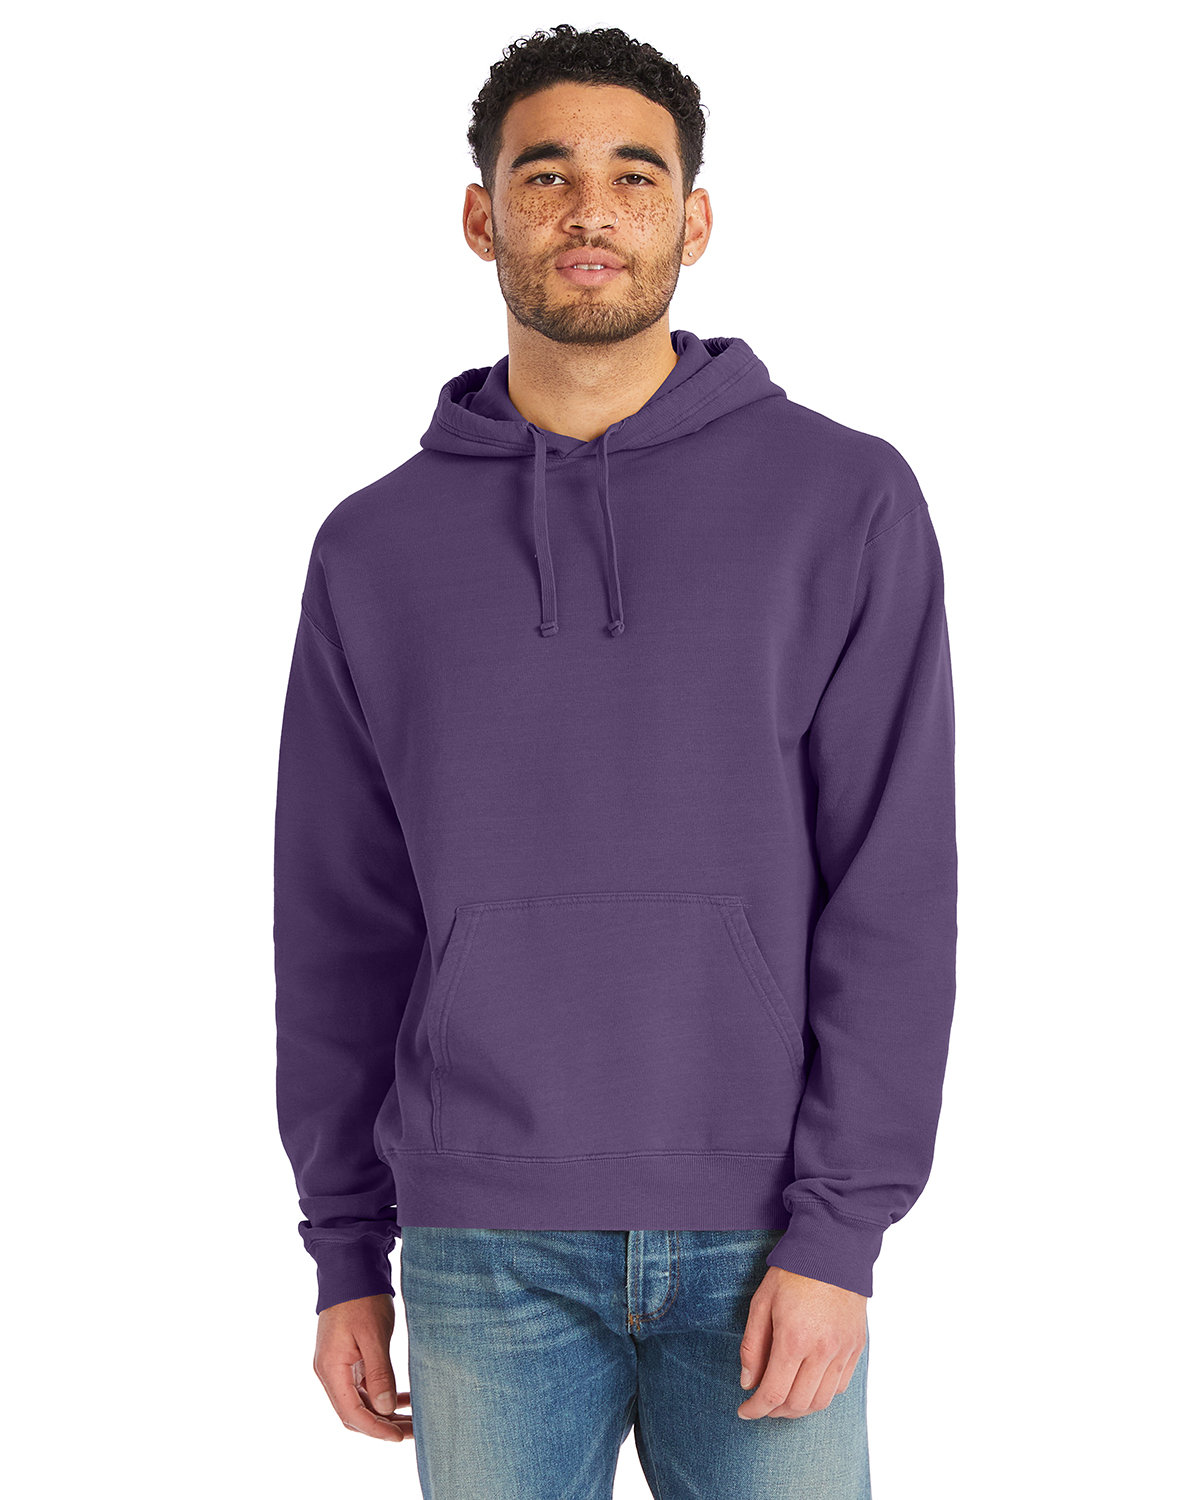 ComfortWash by Hanes Unisex Pullover Hooded Sweatshirt GRAPE SODA 